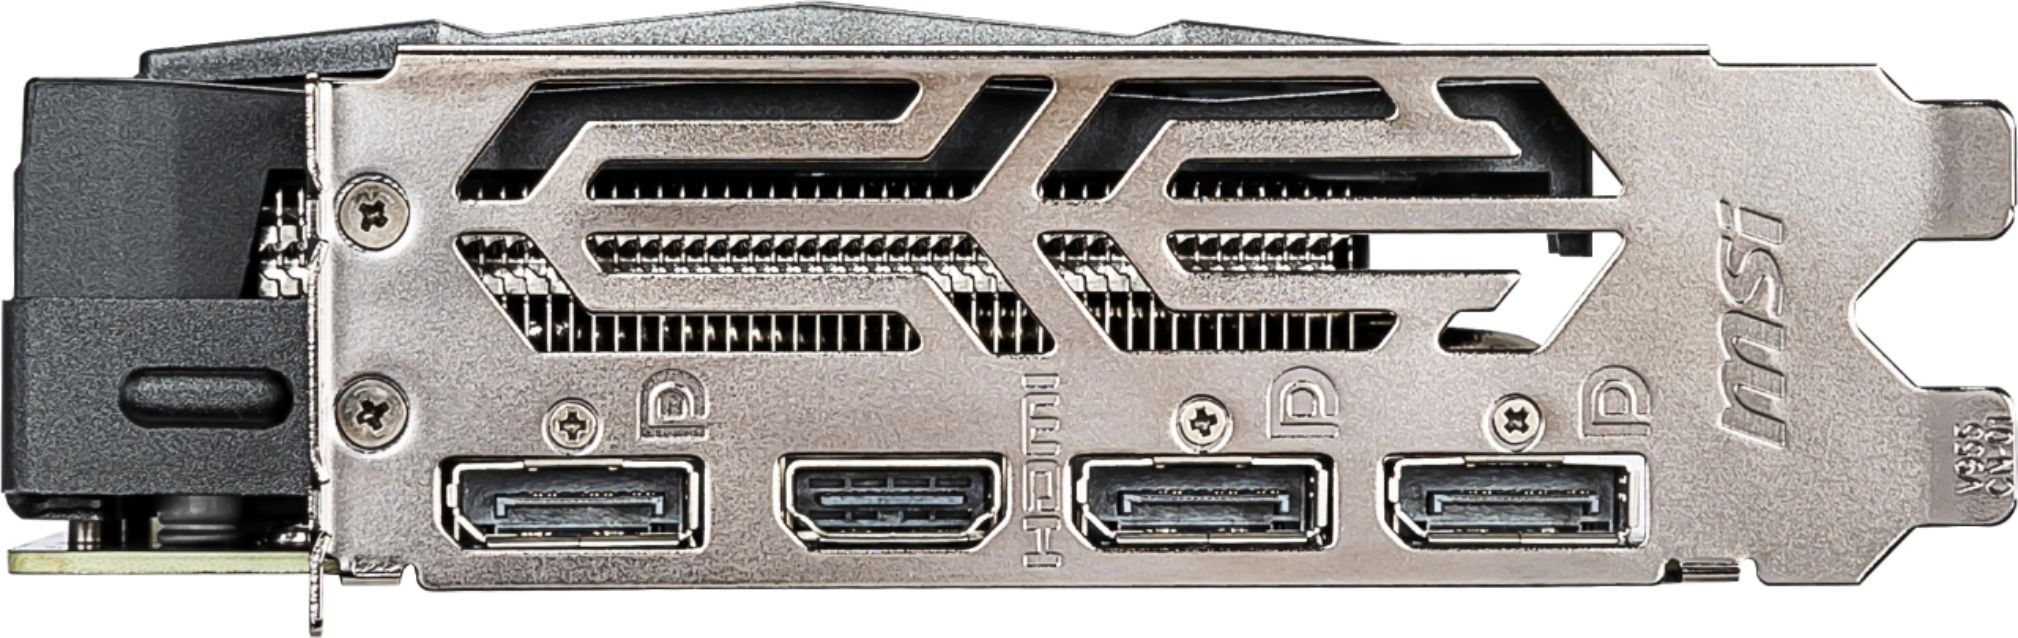 Best Buy: MSI NVIDIA GeForce GTX 1660 6GB GDDR5 PCI Express 3.0